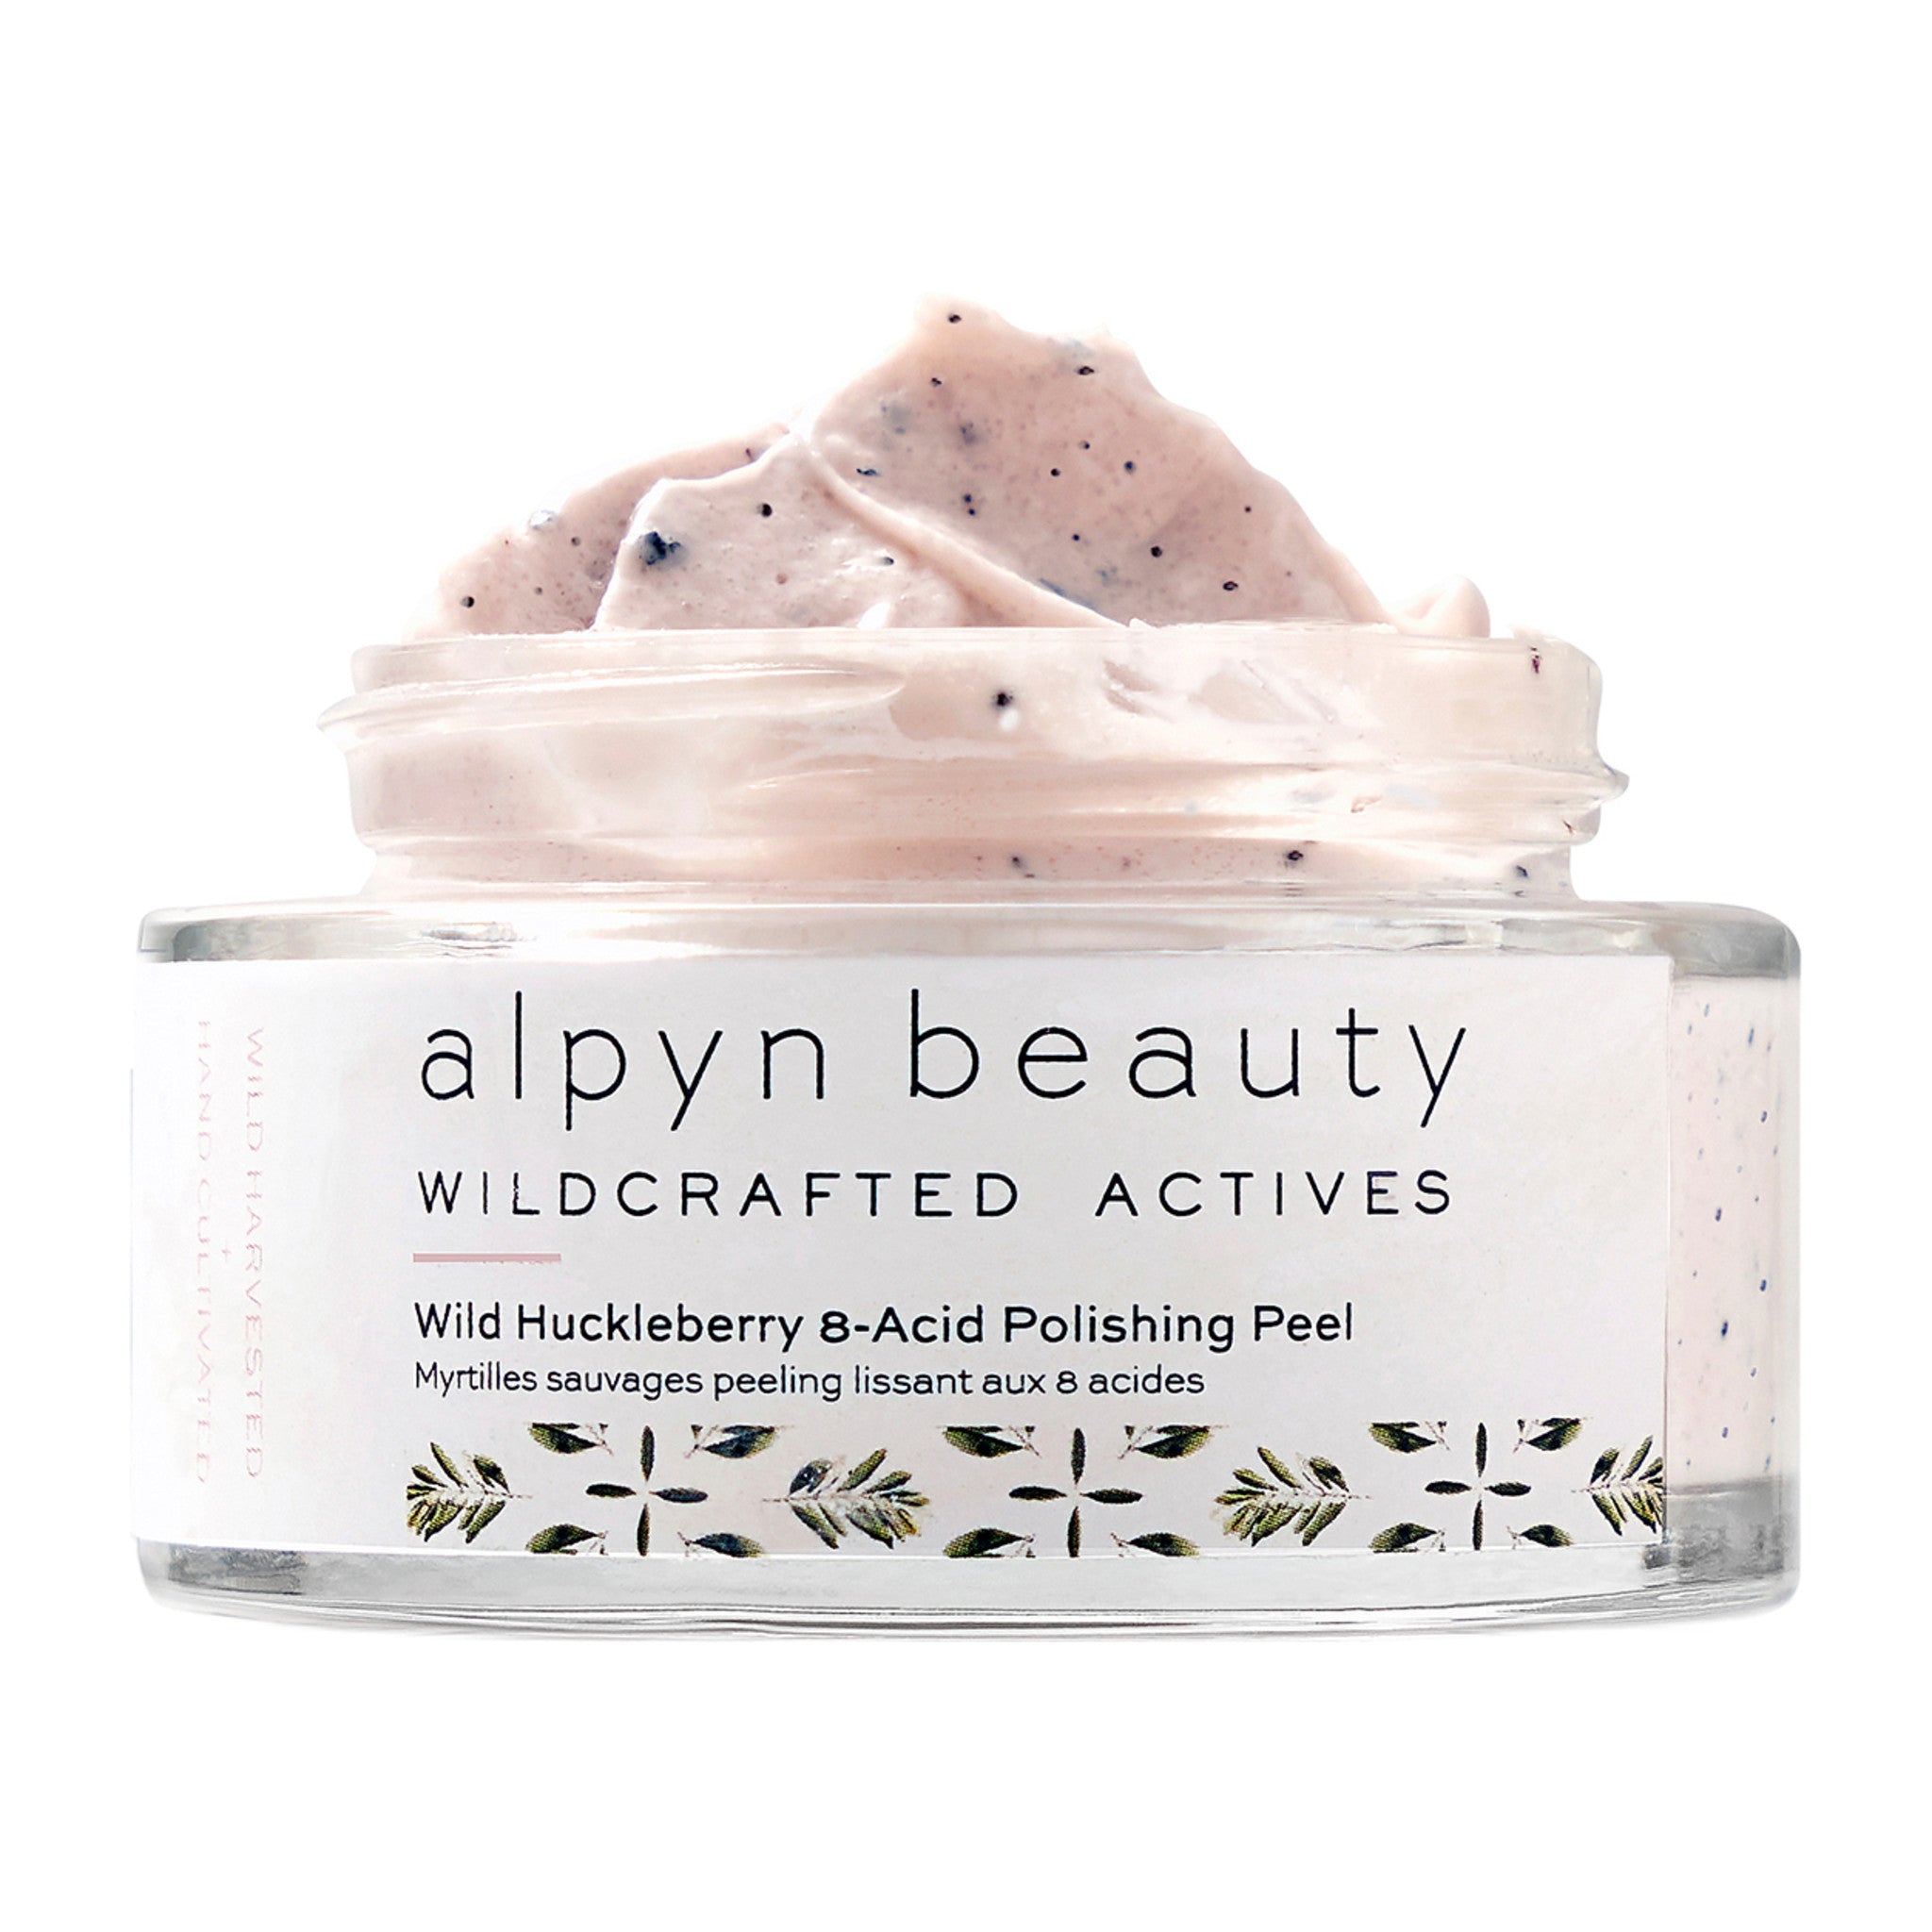 Alpyn Beauty Wild Huckleberry 8-Acid Polishing Peel main image.